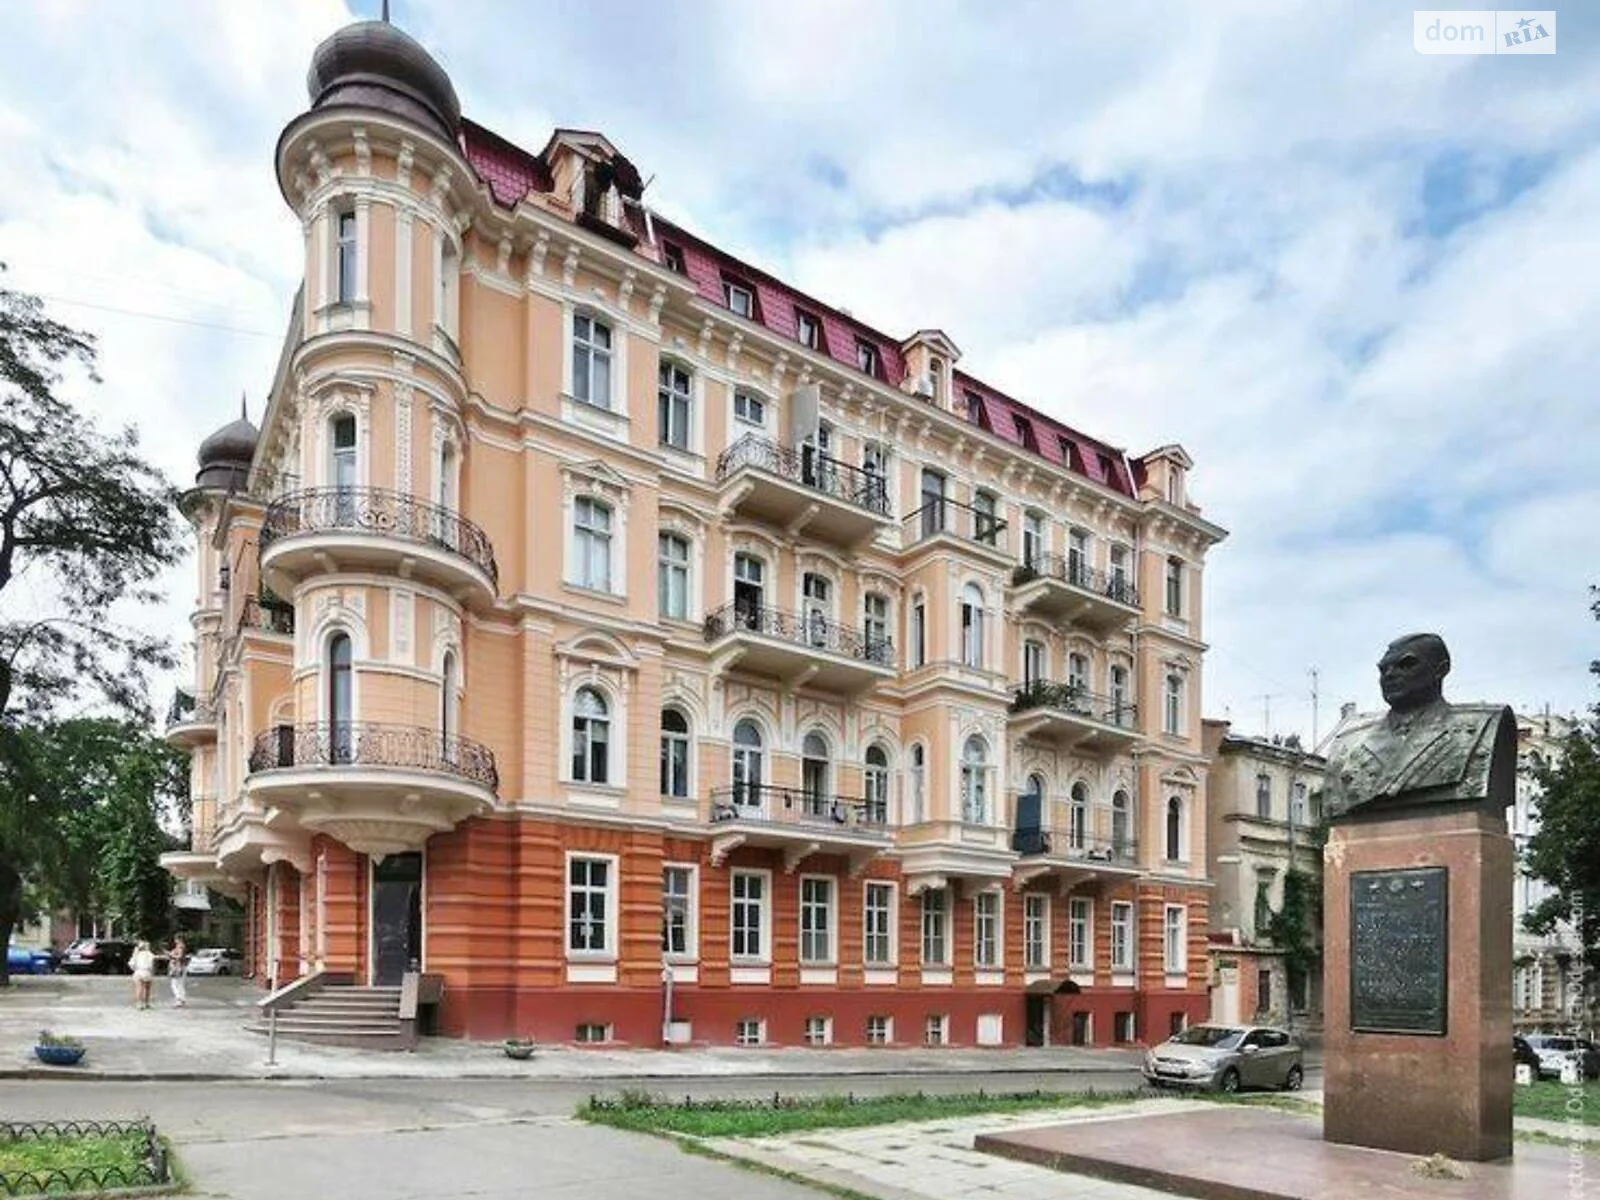 Продается комната 70 кв. м в Одессе, цена: 45000 $ - фото 1